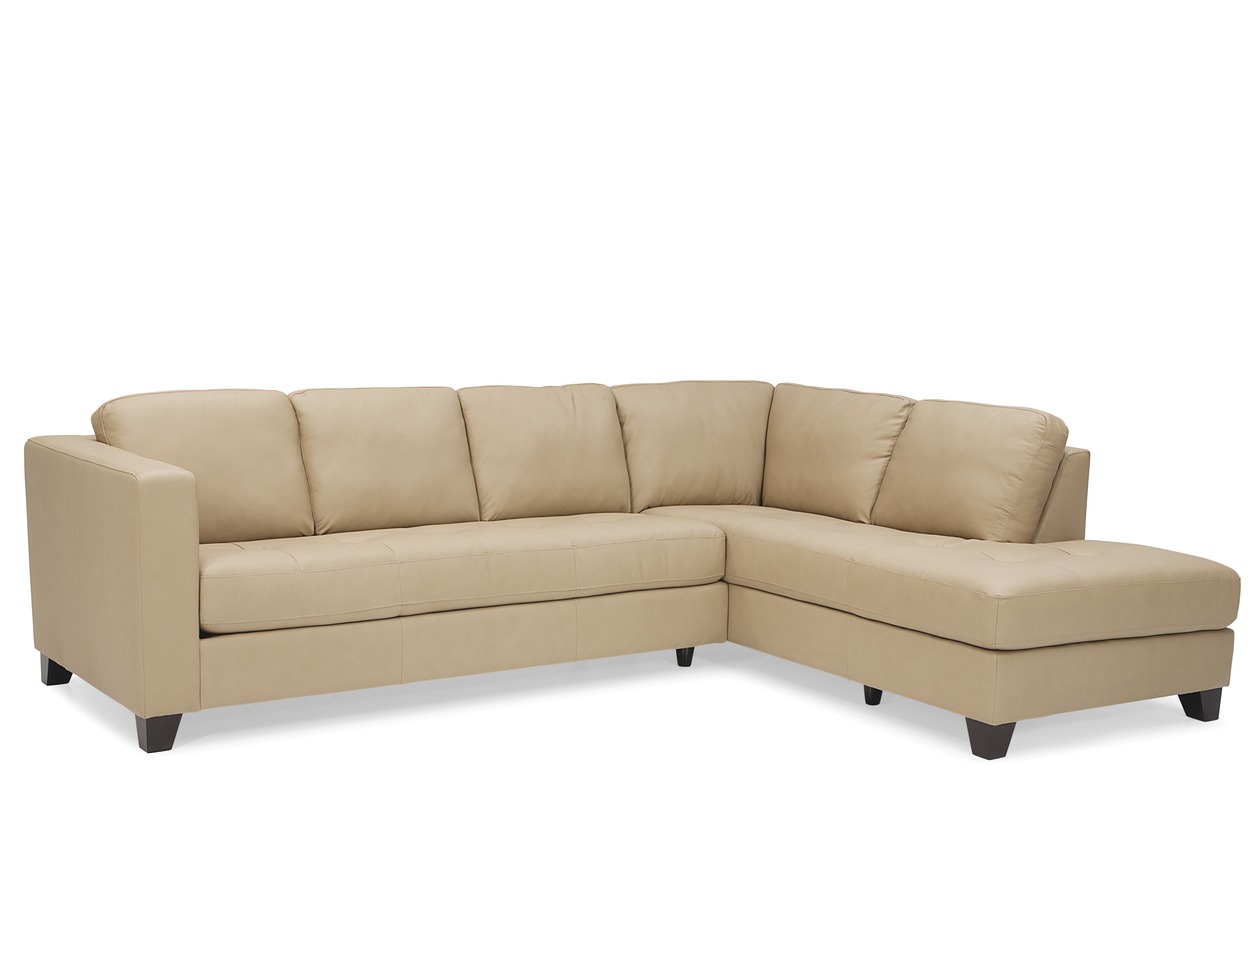 Jura Palliser Furniture, Palliser Leather Sofa Colors